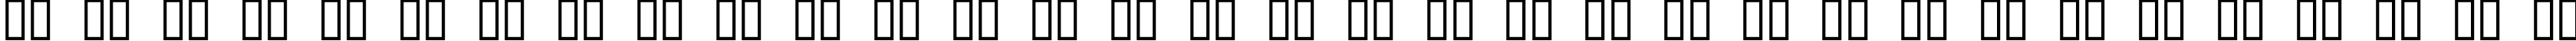 Пример написания русского алфавита шрифтом BoxC